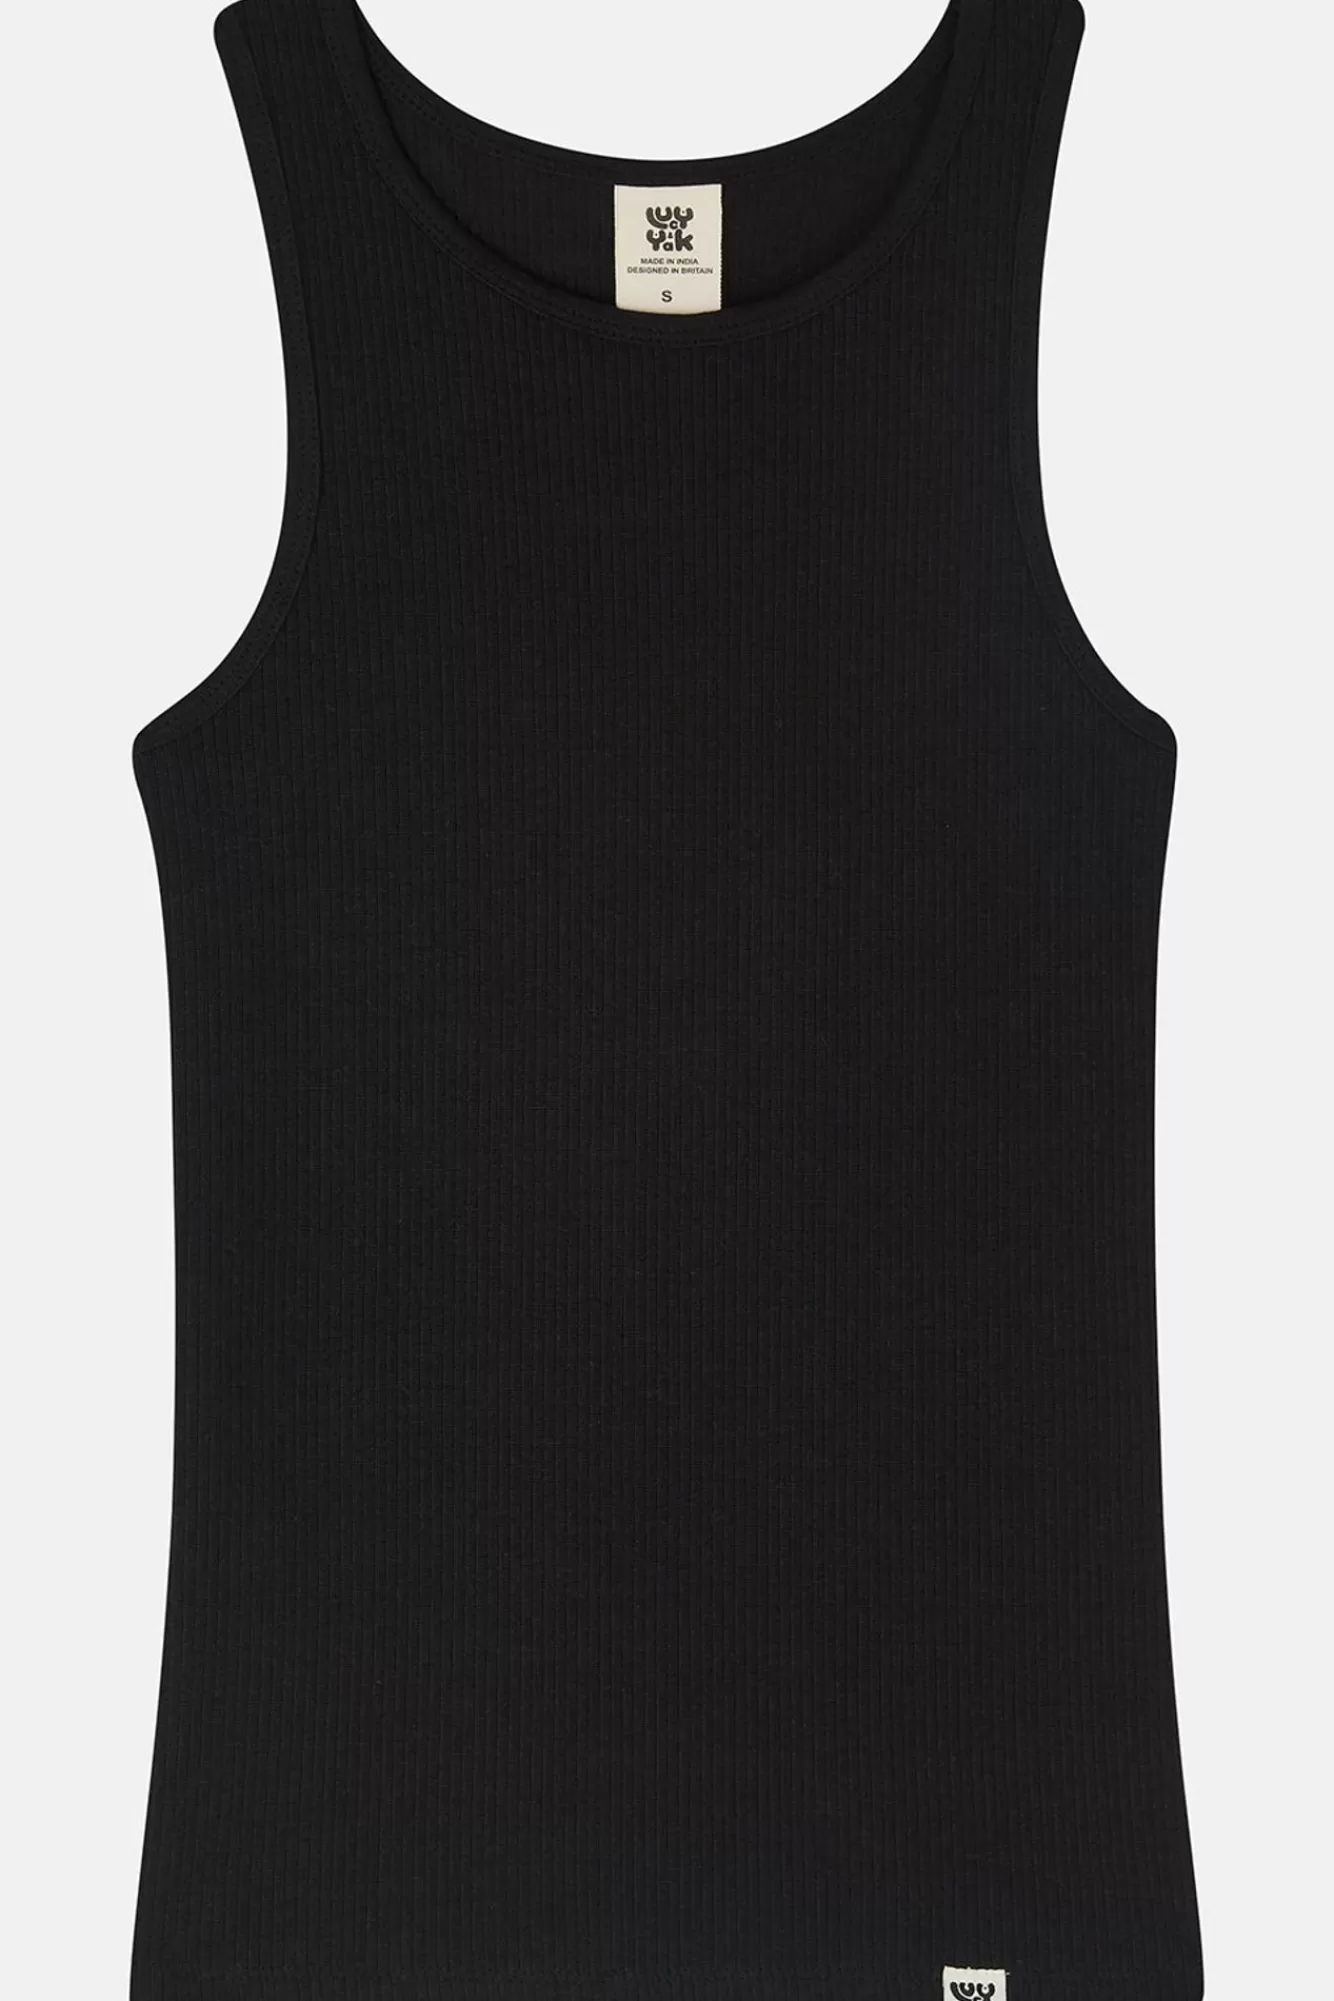 Flo Vest Top: Organic Cotton & Lenzing™ Ecovero™ - Black-Lucy & Yak New